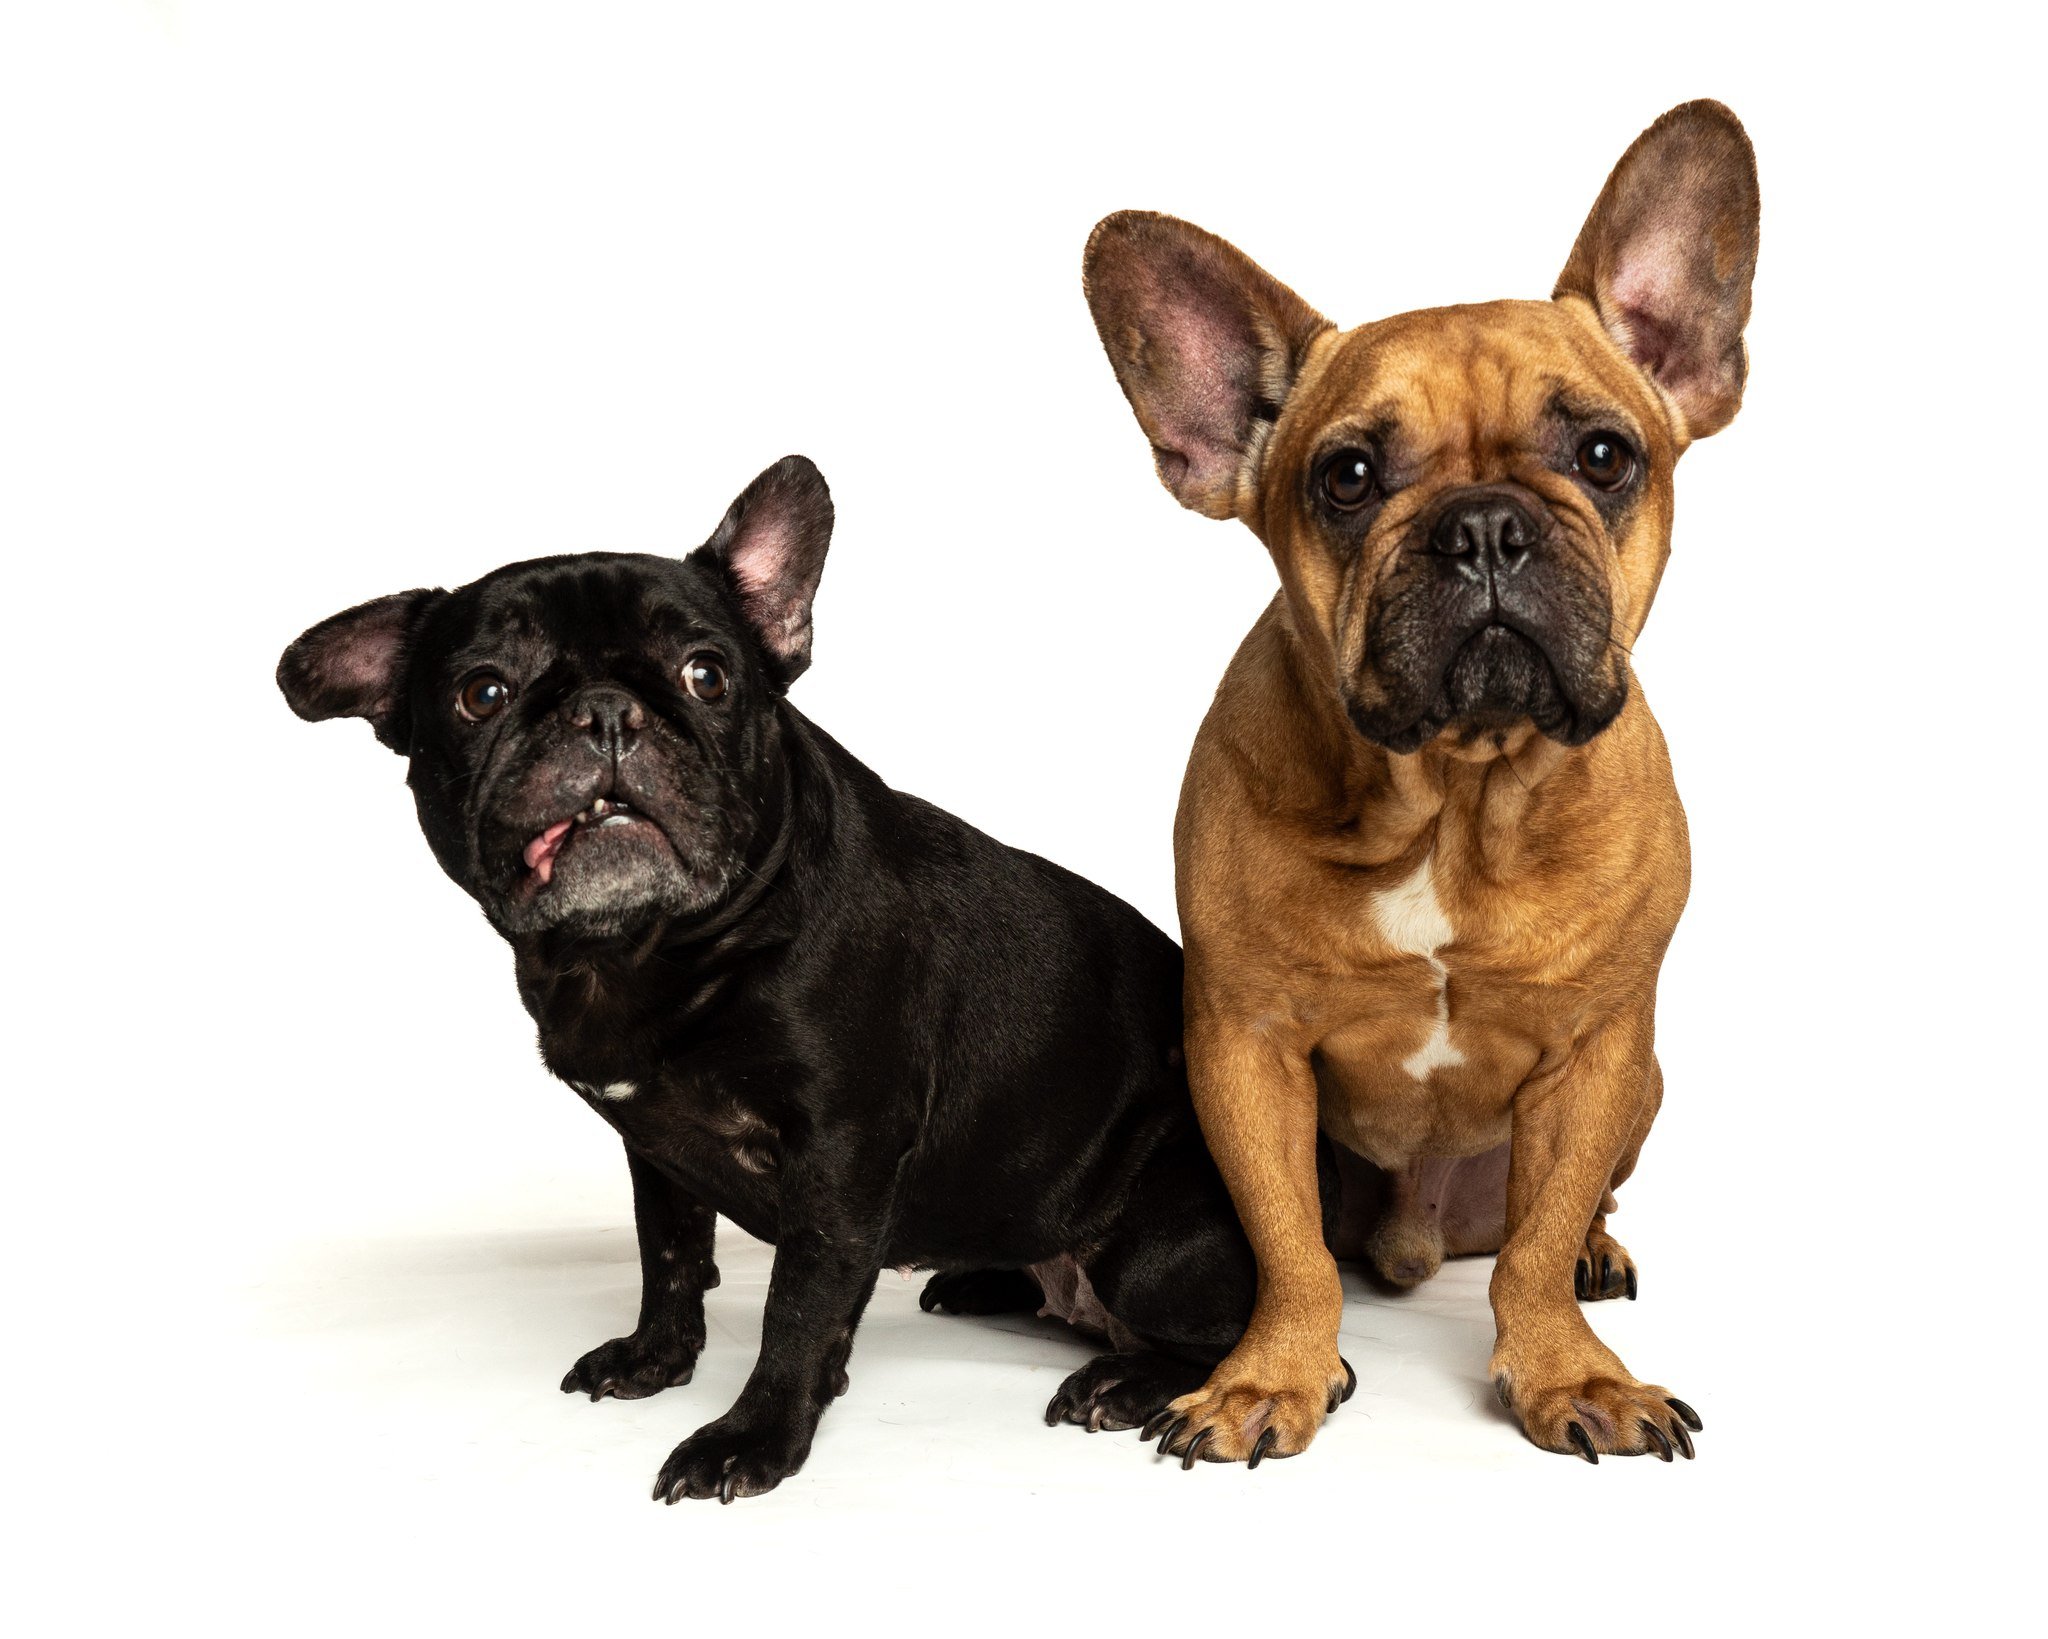 Tucker and Abby.

#doglover #dogsofinstagram #puppy #dogstagram #dog #dogphoto #dogpics #dogportrait #pet #petphoto #petphotography #petphotographer #dogoftheday